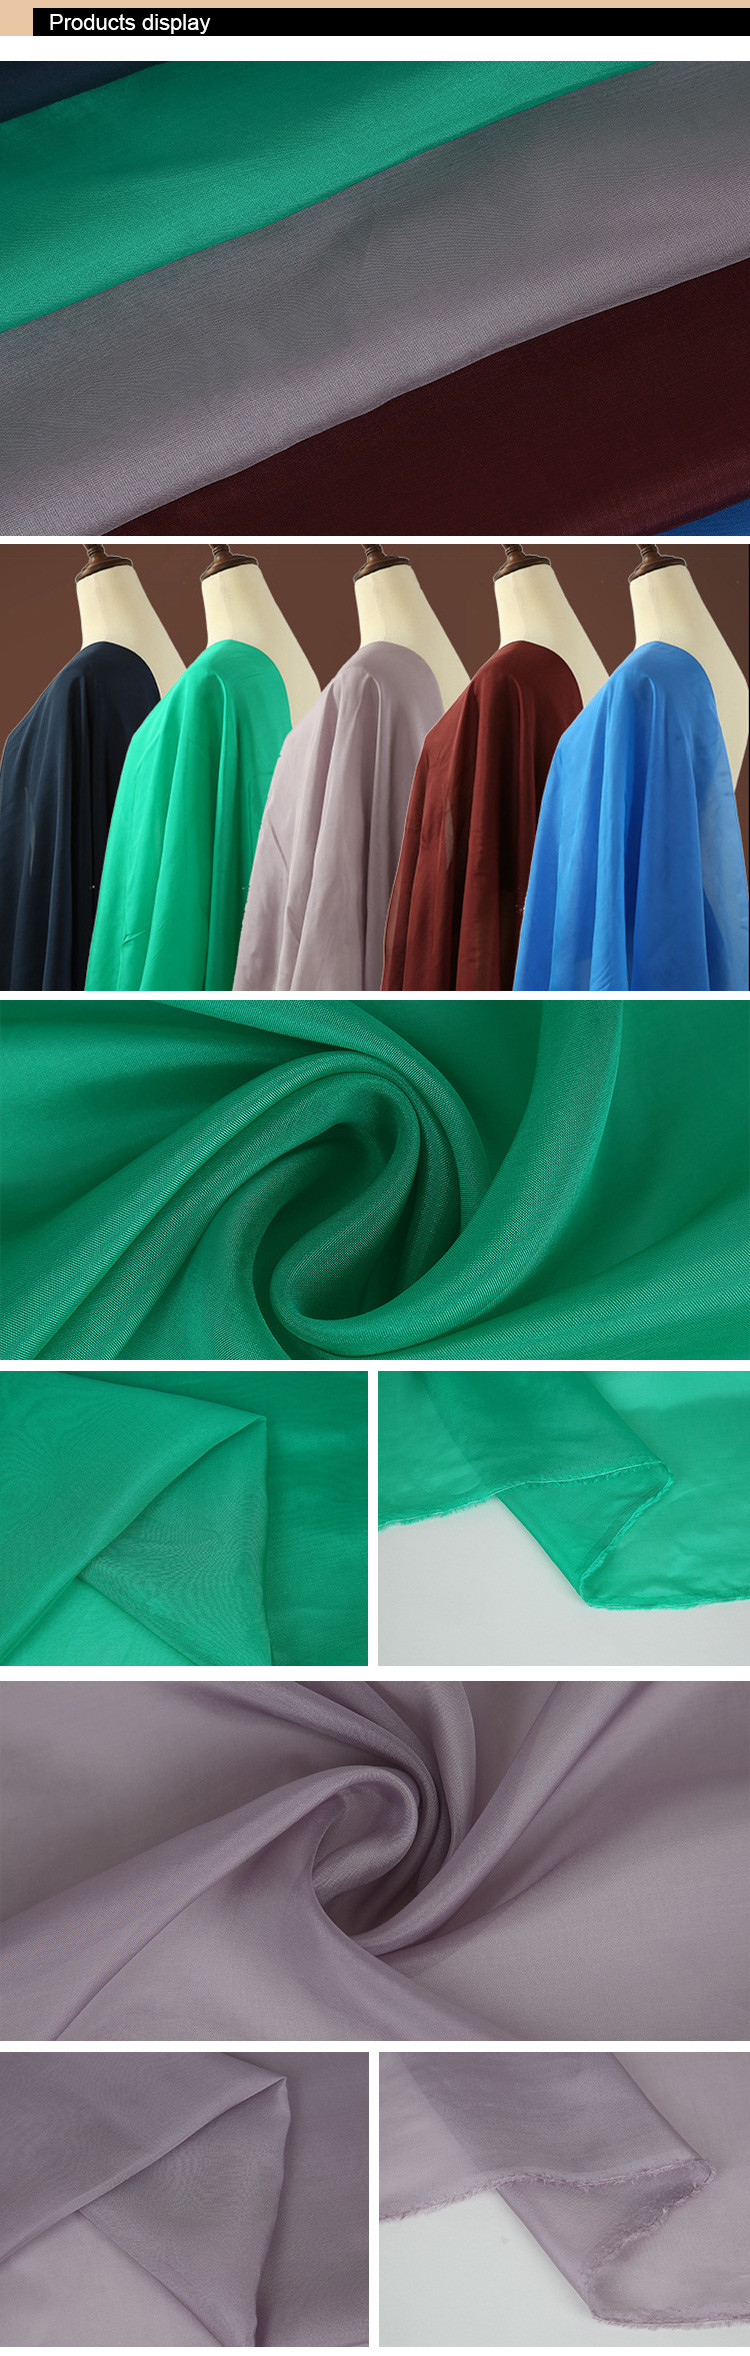 N29 Solid Color Blank T-Shirts Rayon Challis Fabric 70% Rayon